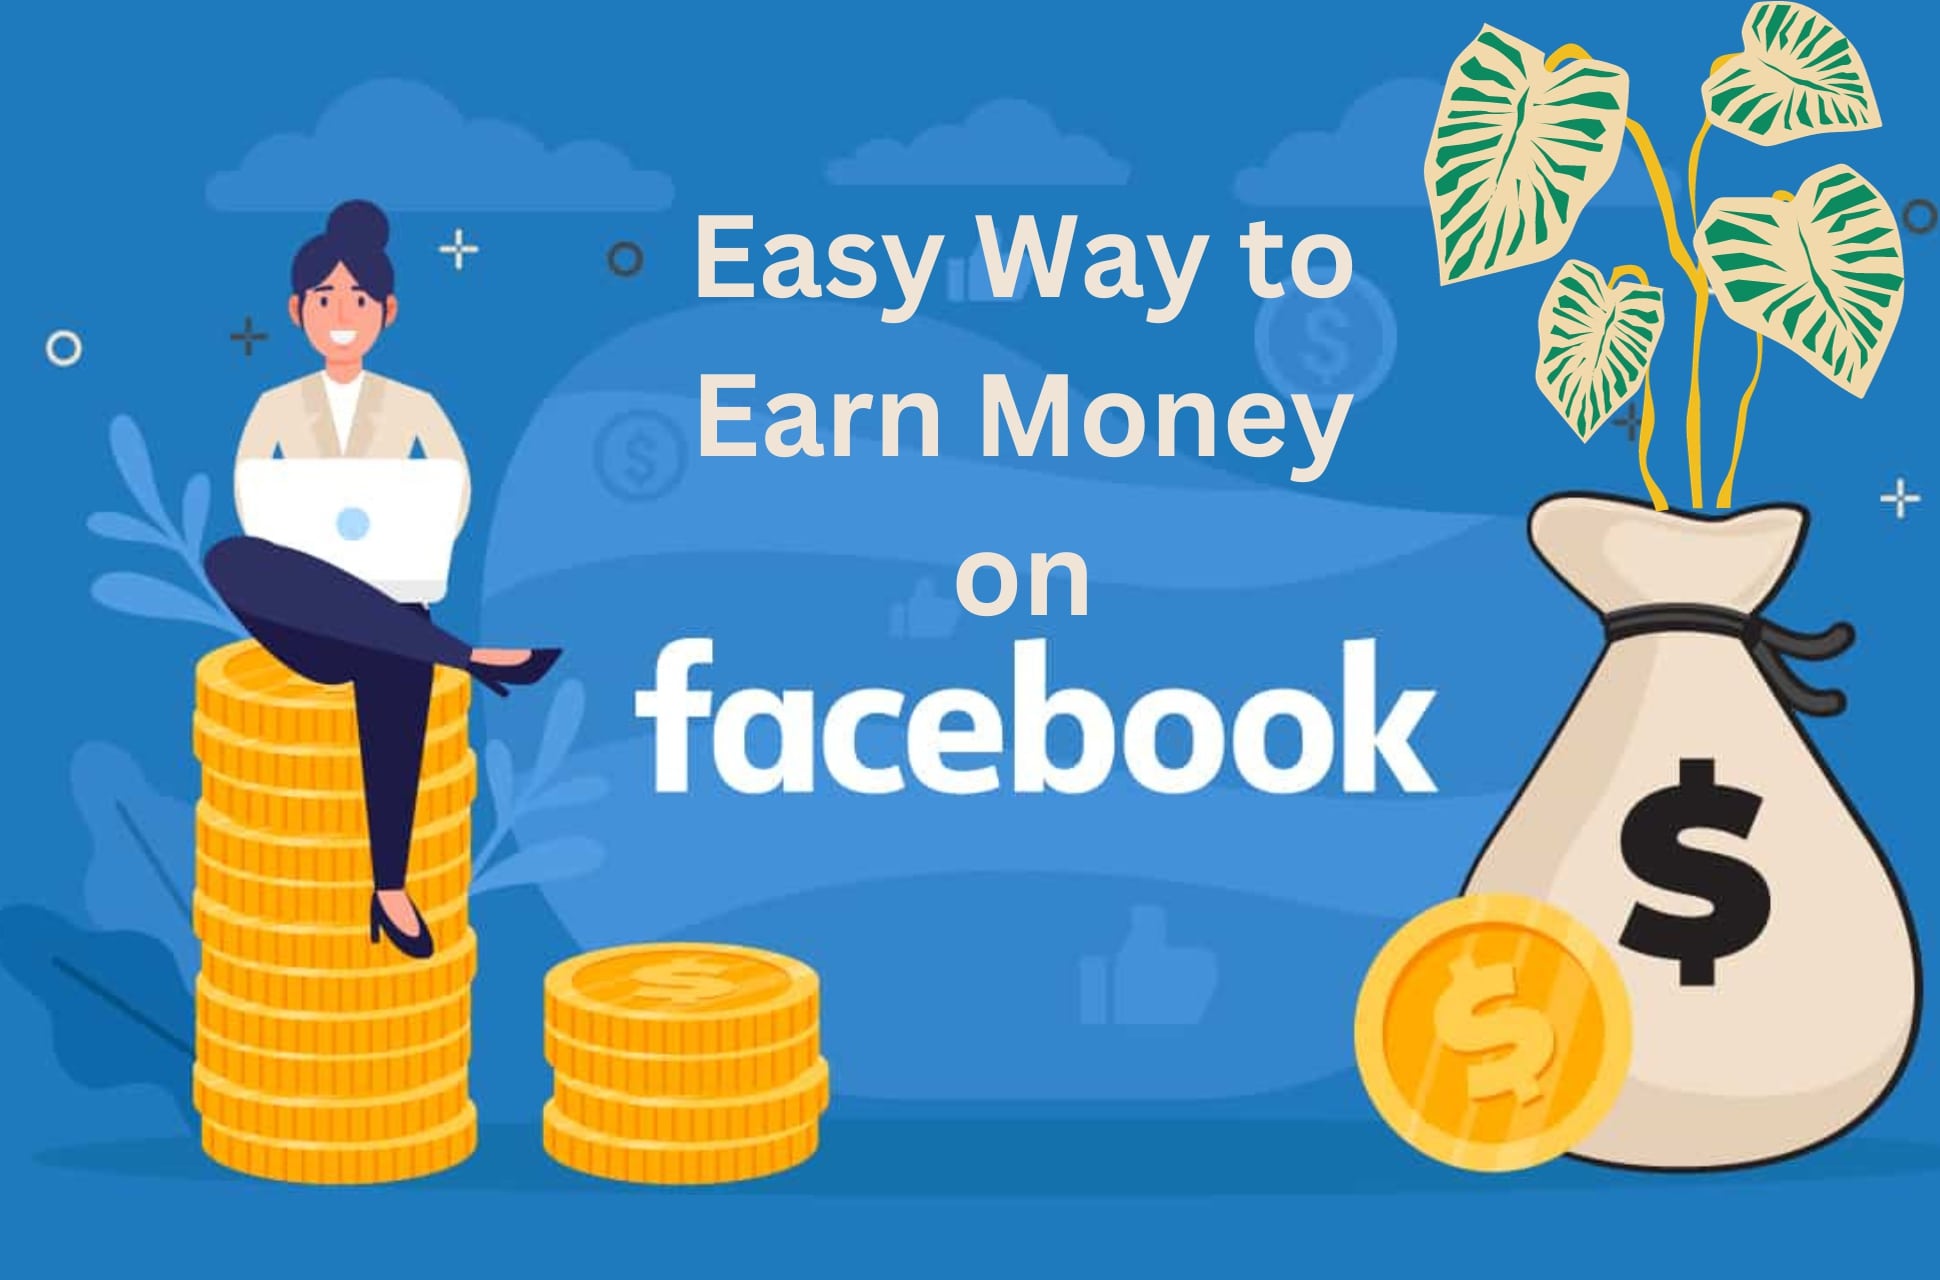 Earn money on Facebook